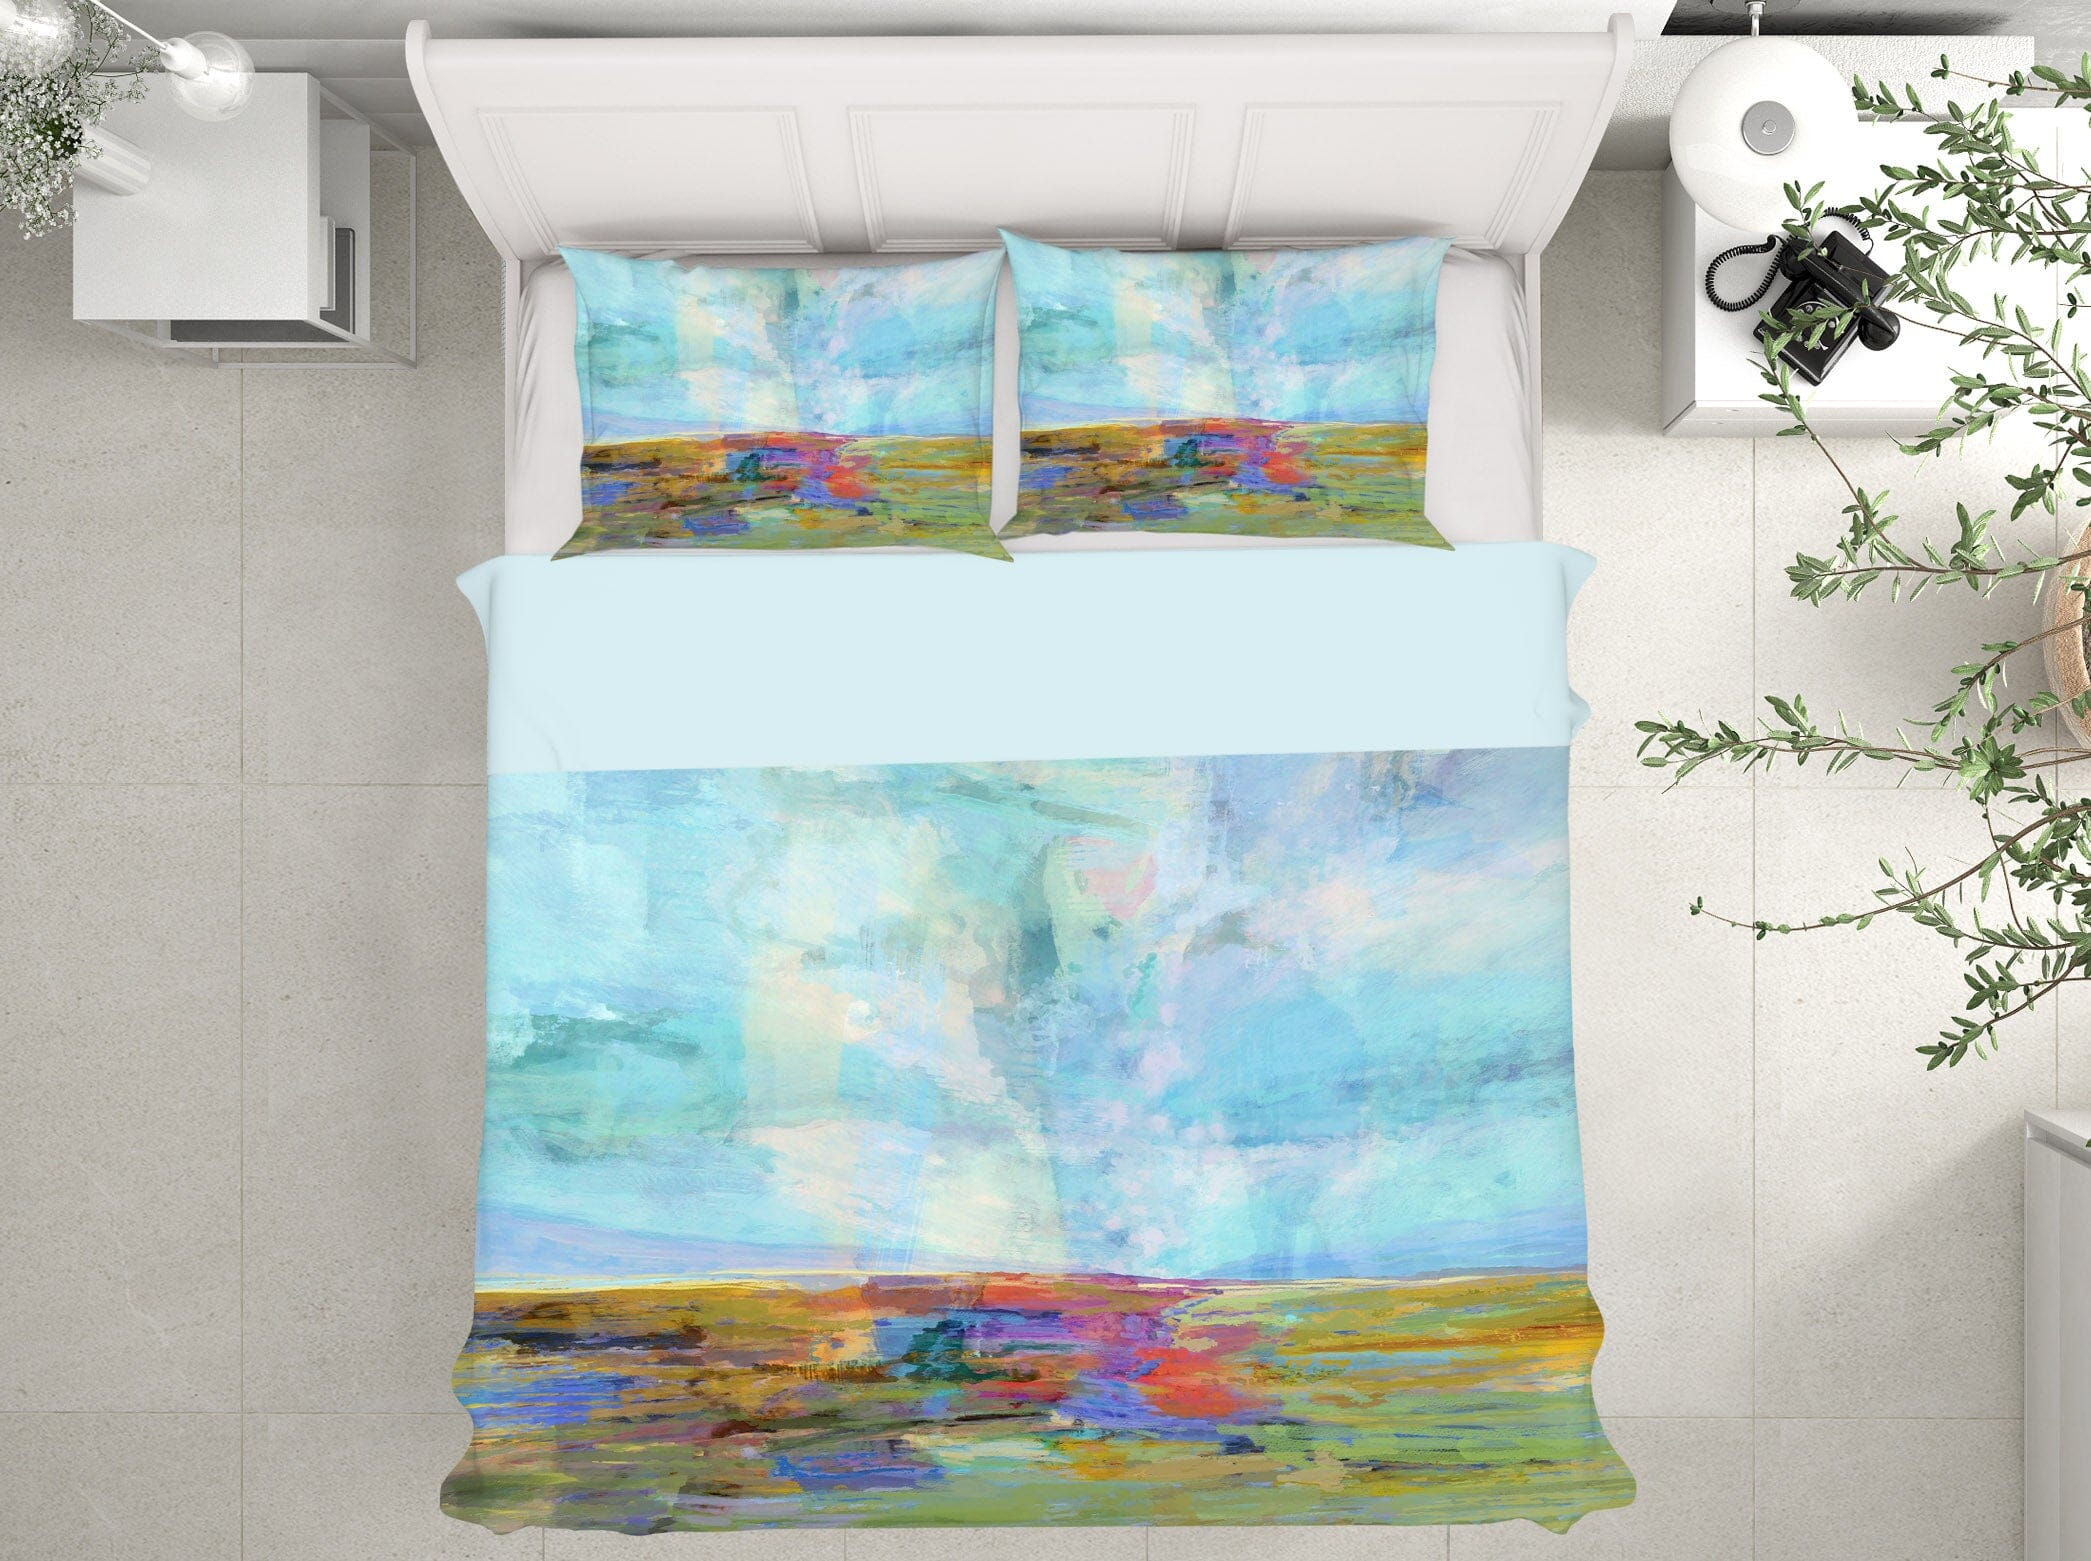 3D Prairie 2118 Michael Tienhaara Bedding Bed Pillowcases Quilt Quiet Covers AJ Creativity Home 